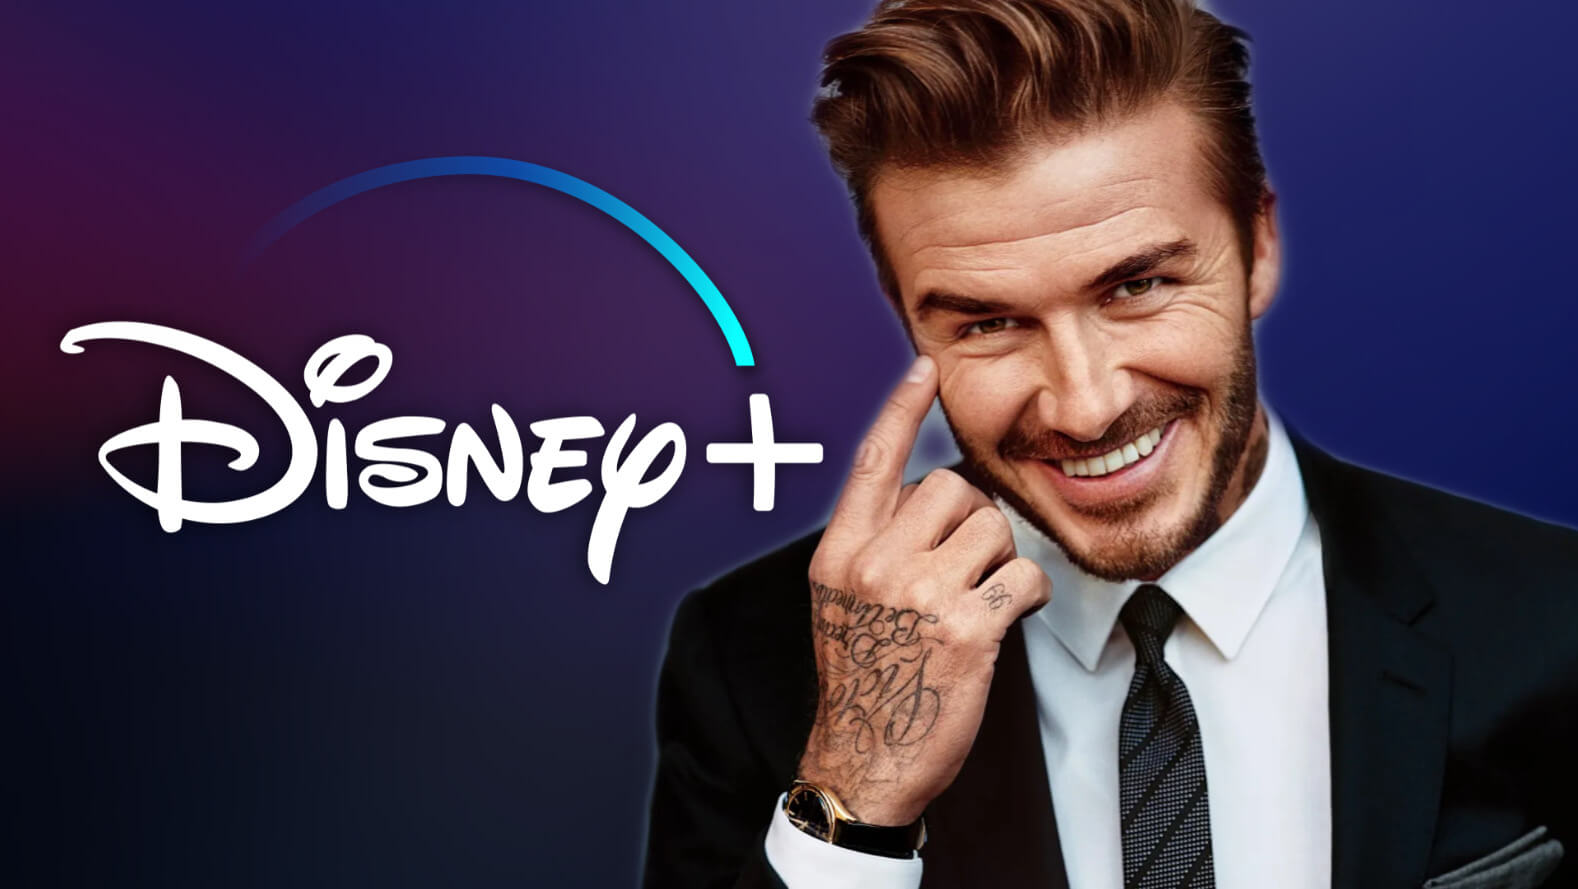 David Beckham Soccer Series Reportedly in Development For Disney+